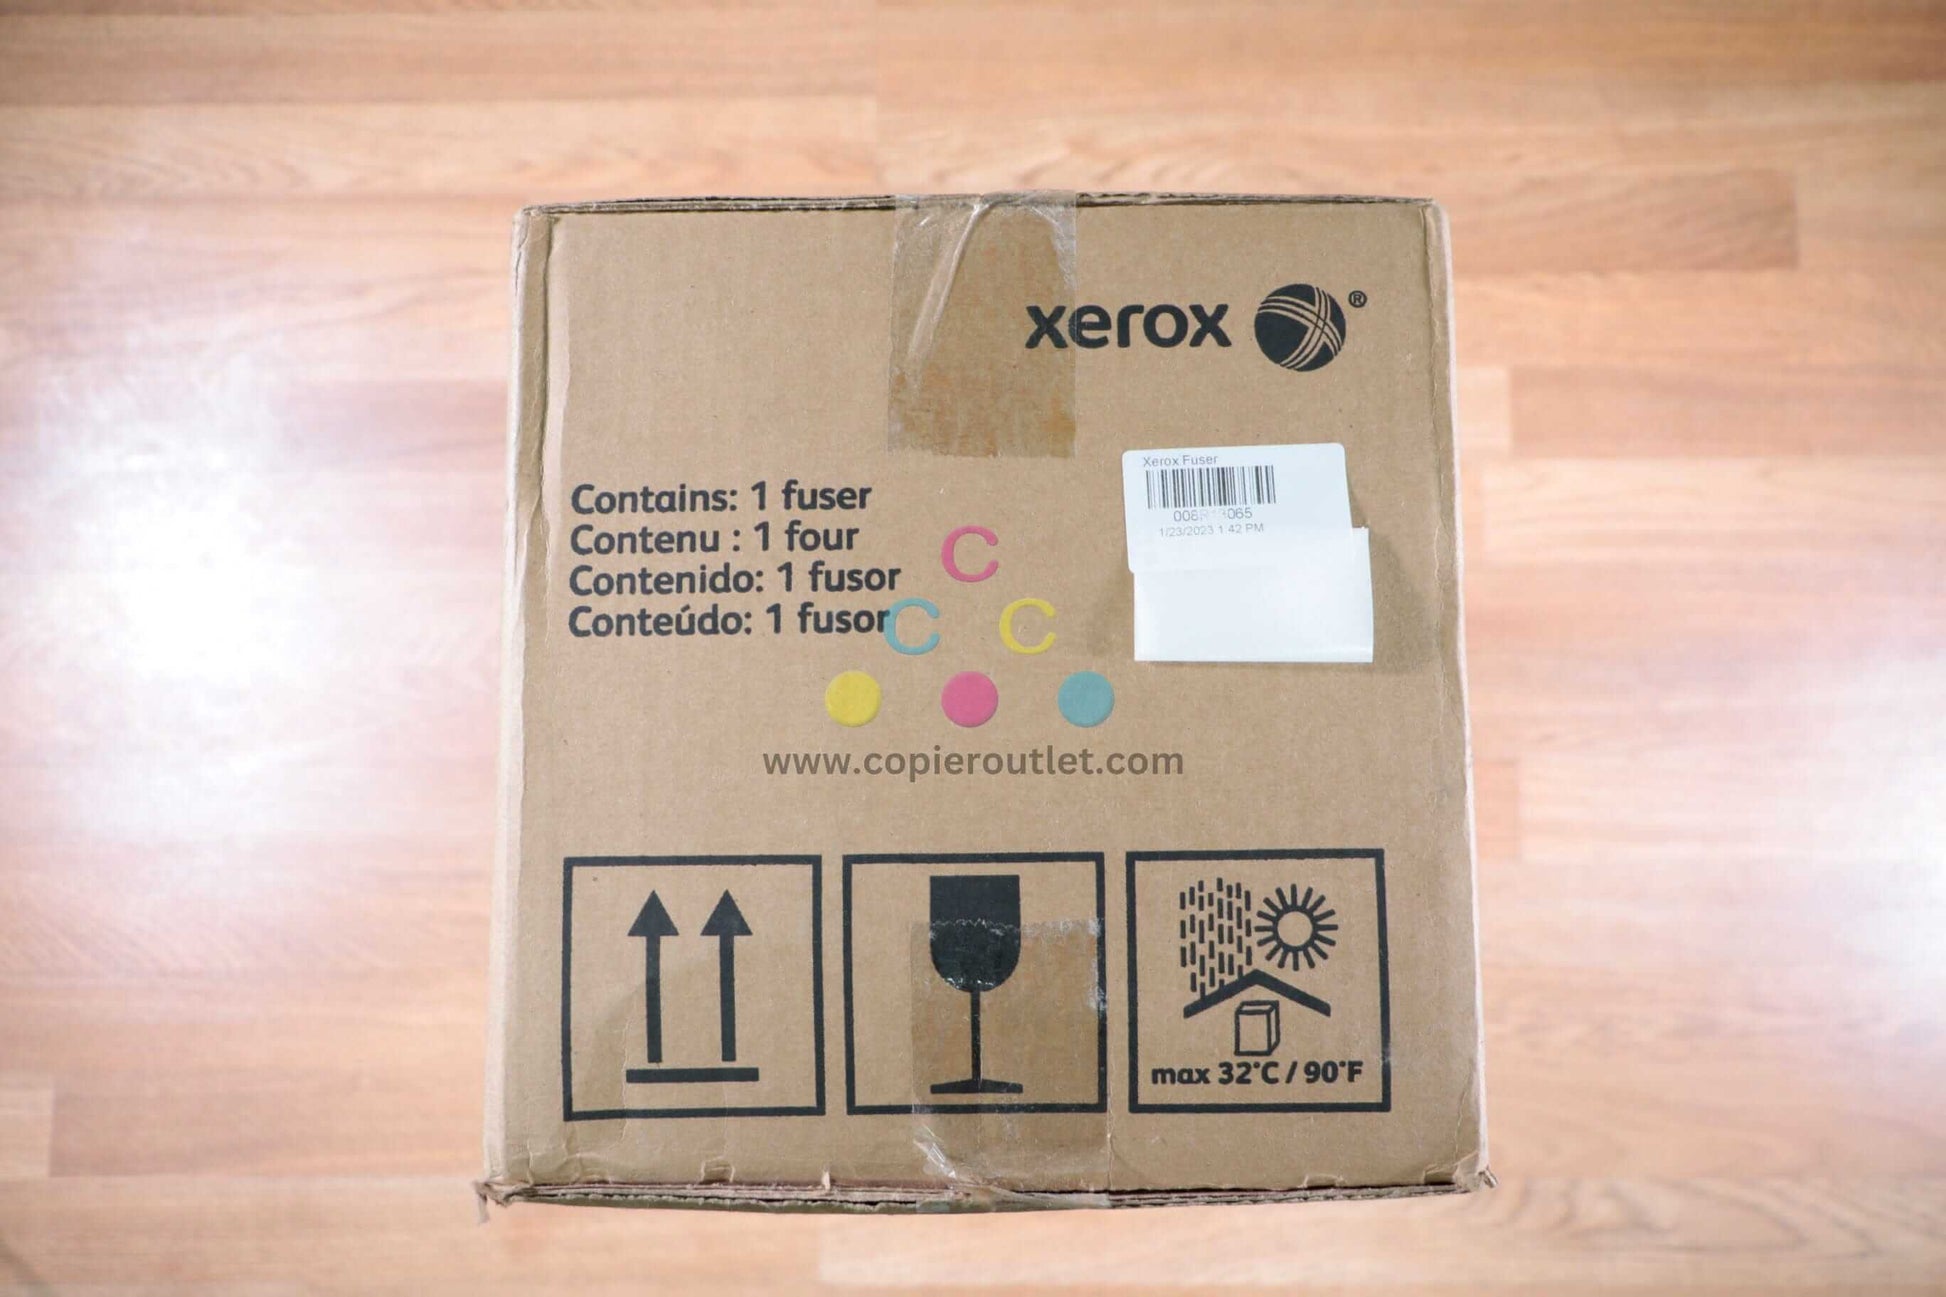 Genuine Xerox Fuser 008R13065 For Digital Color Press 700, 700i, 770 Same Day!!! - copier-clearance-center